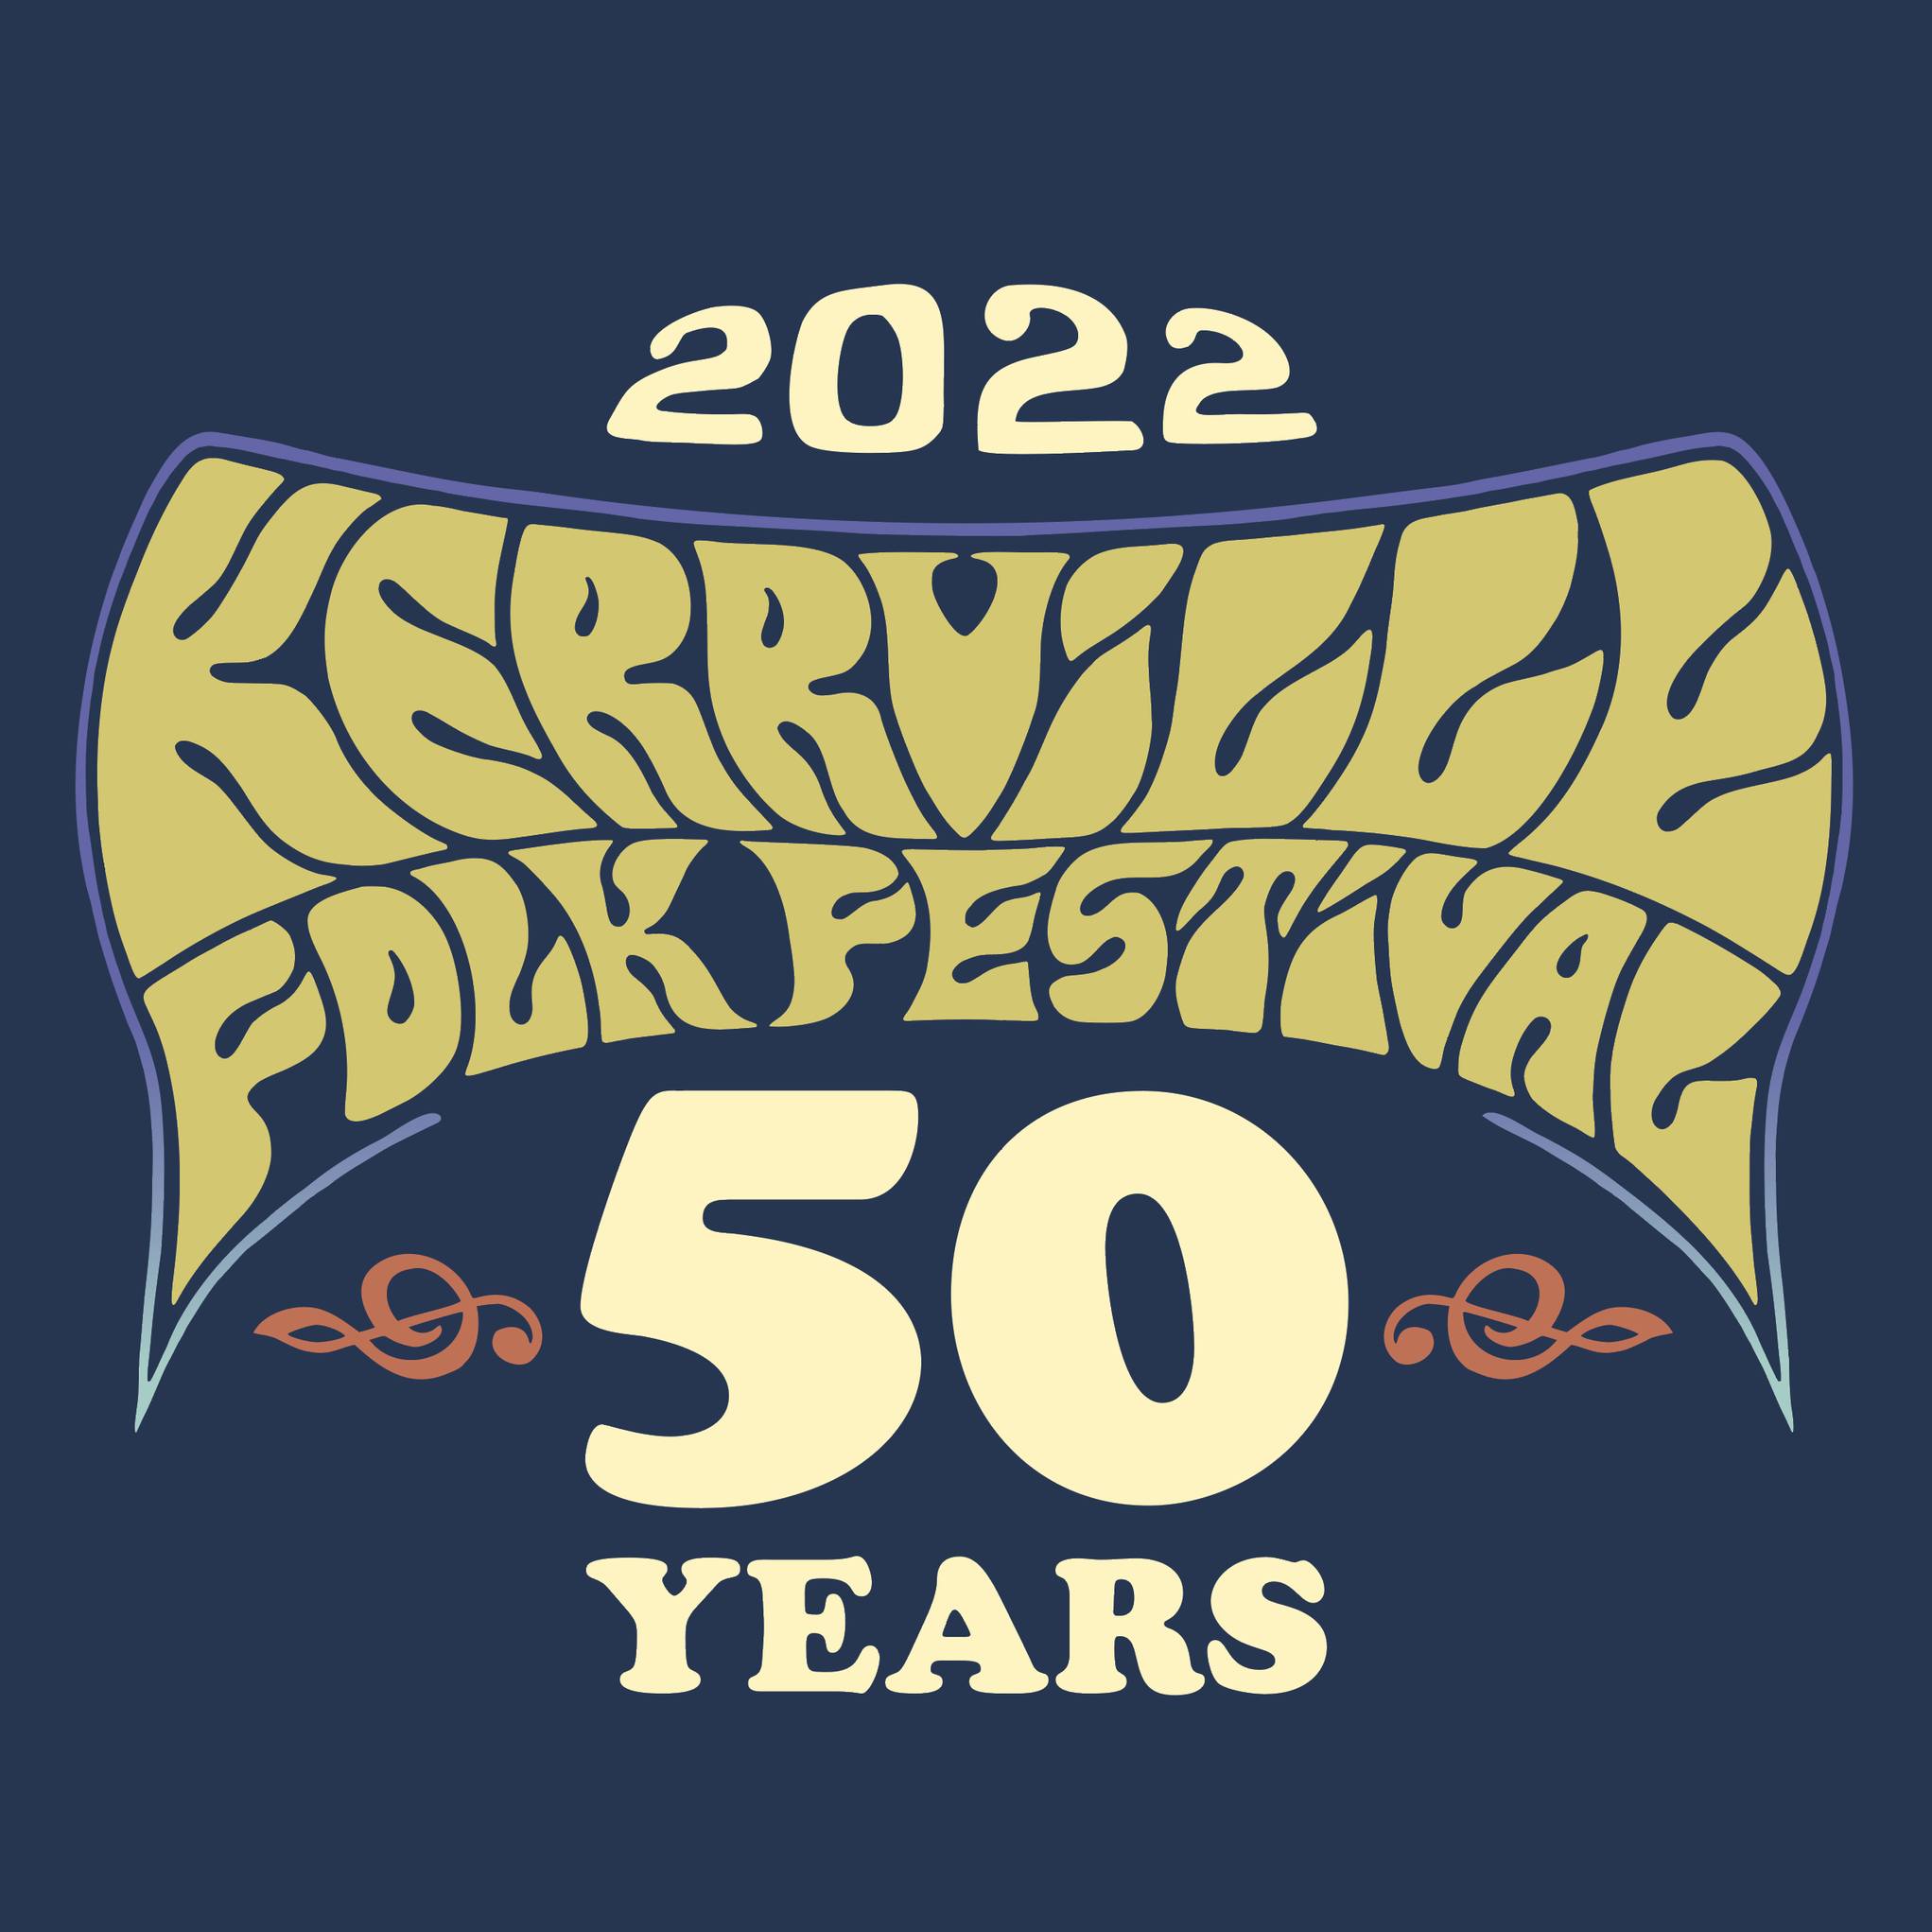 KERRVILLE FOLK FESTIVAL 2022 logo